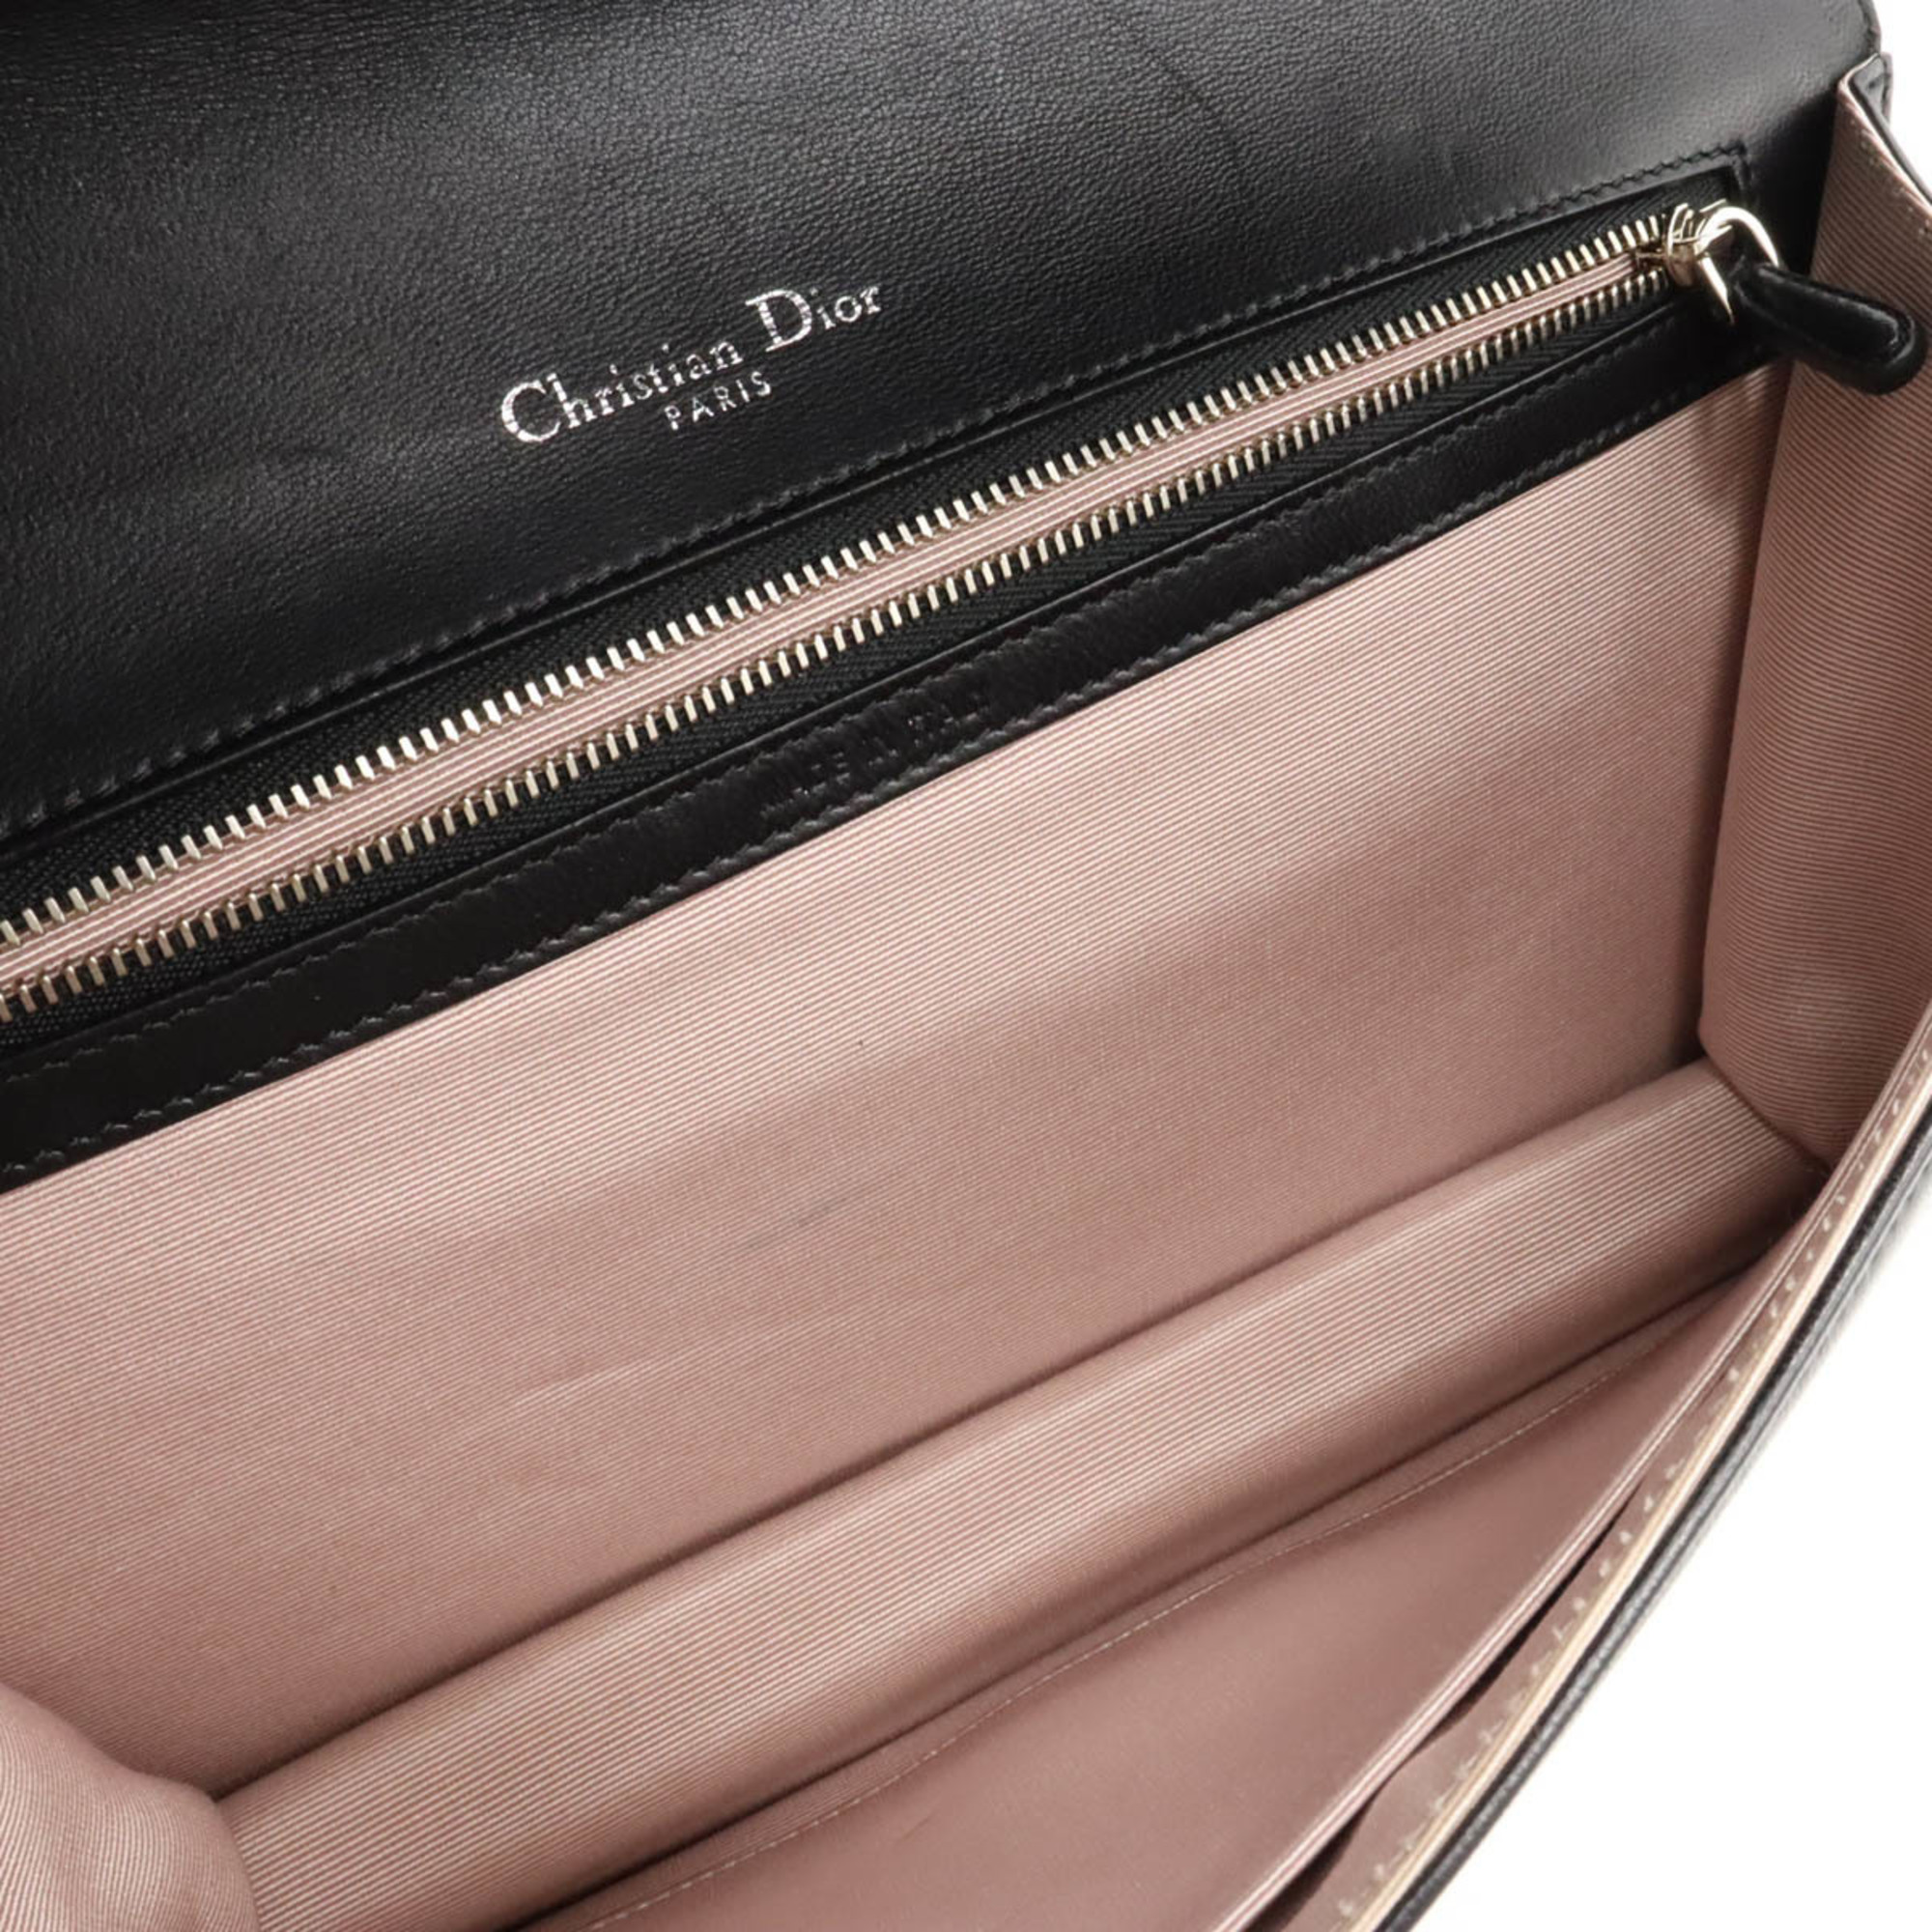 Christian Dior Diorama Chain Bag Shoulder Leather Black